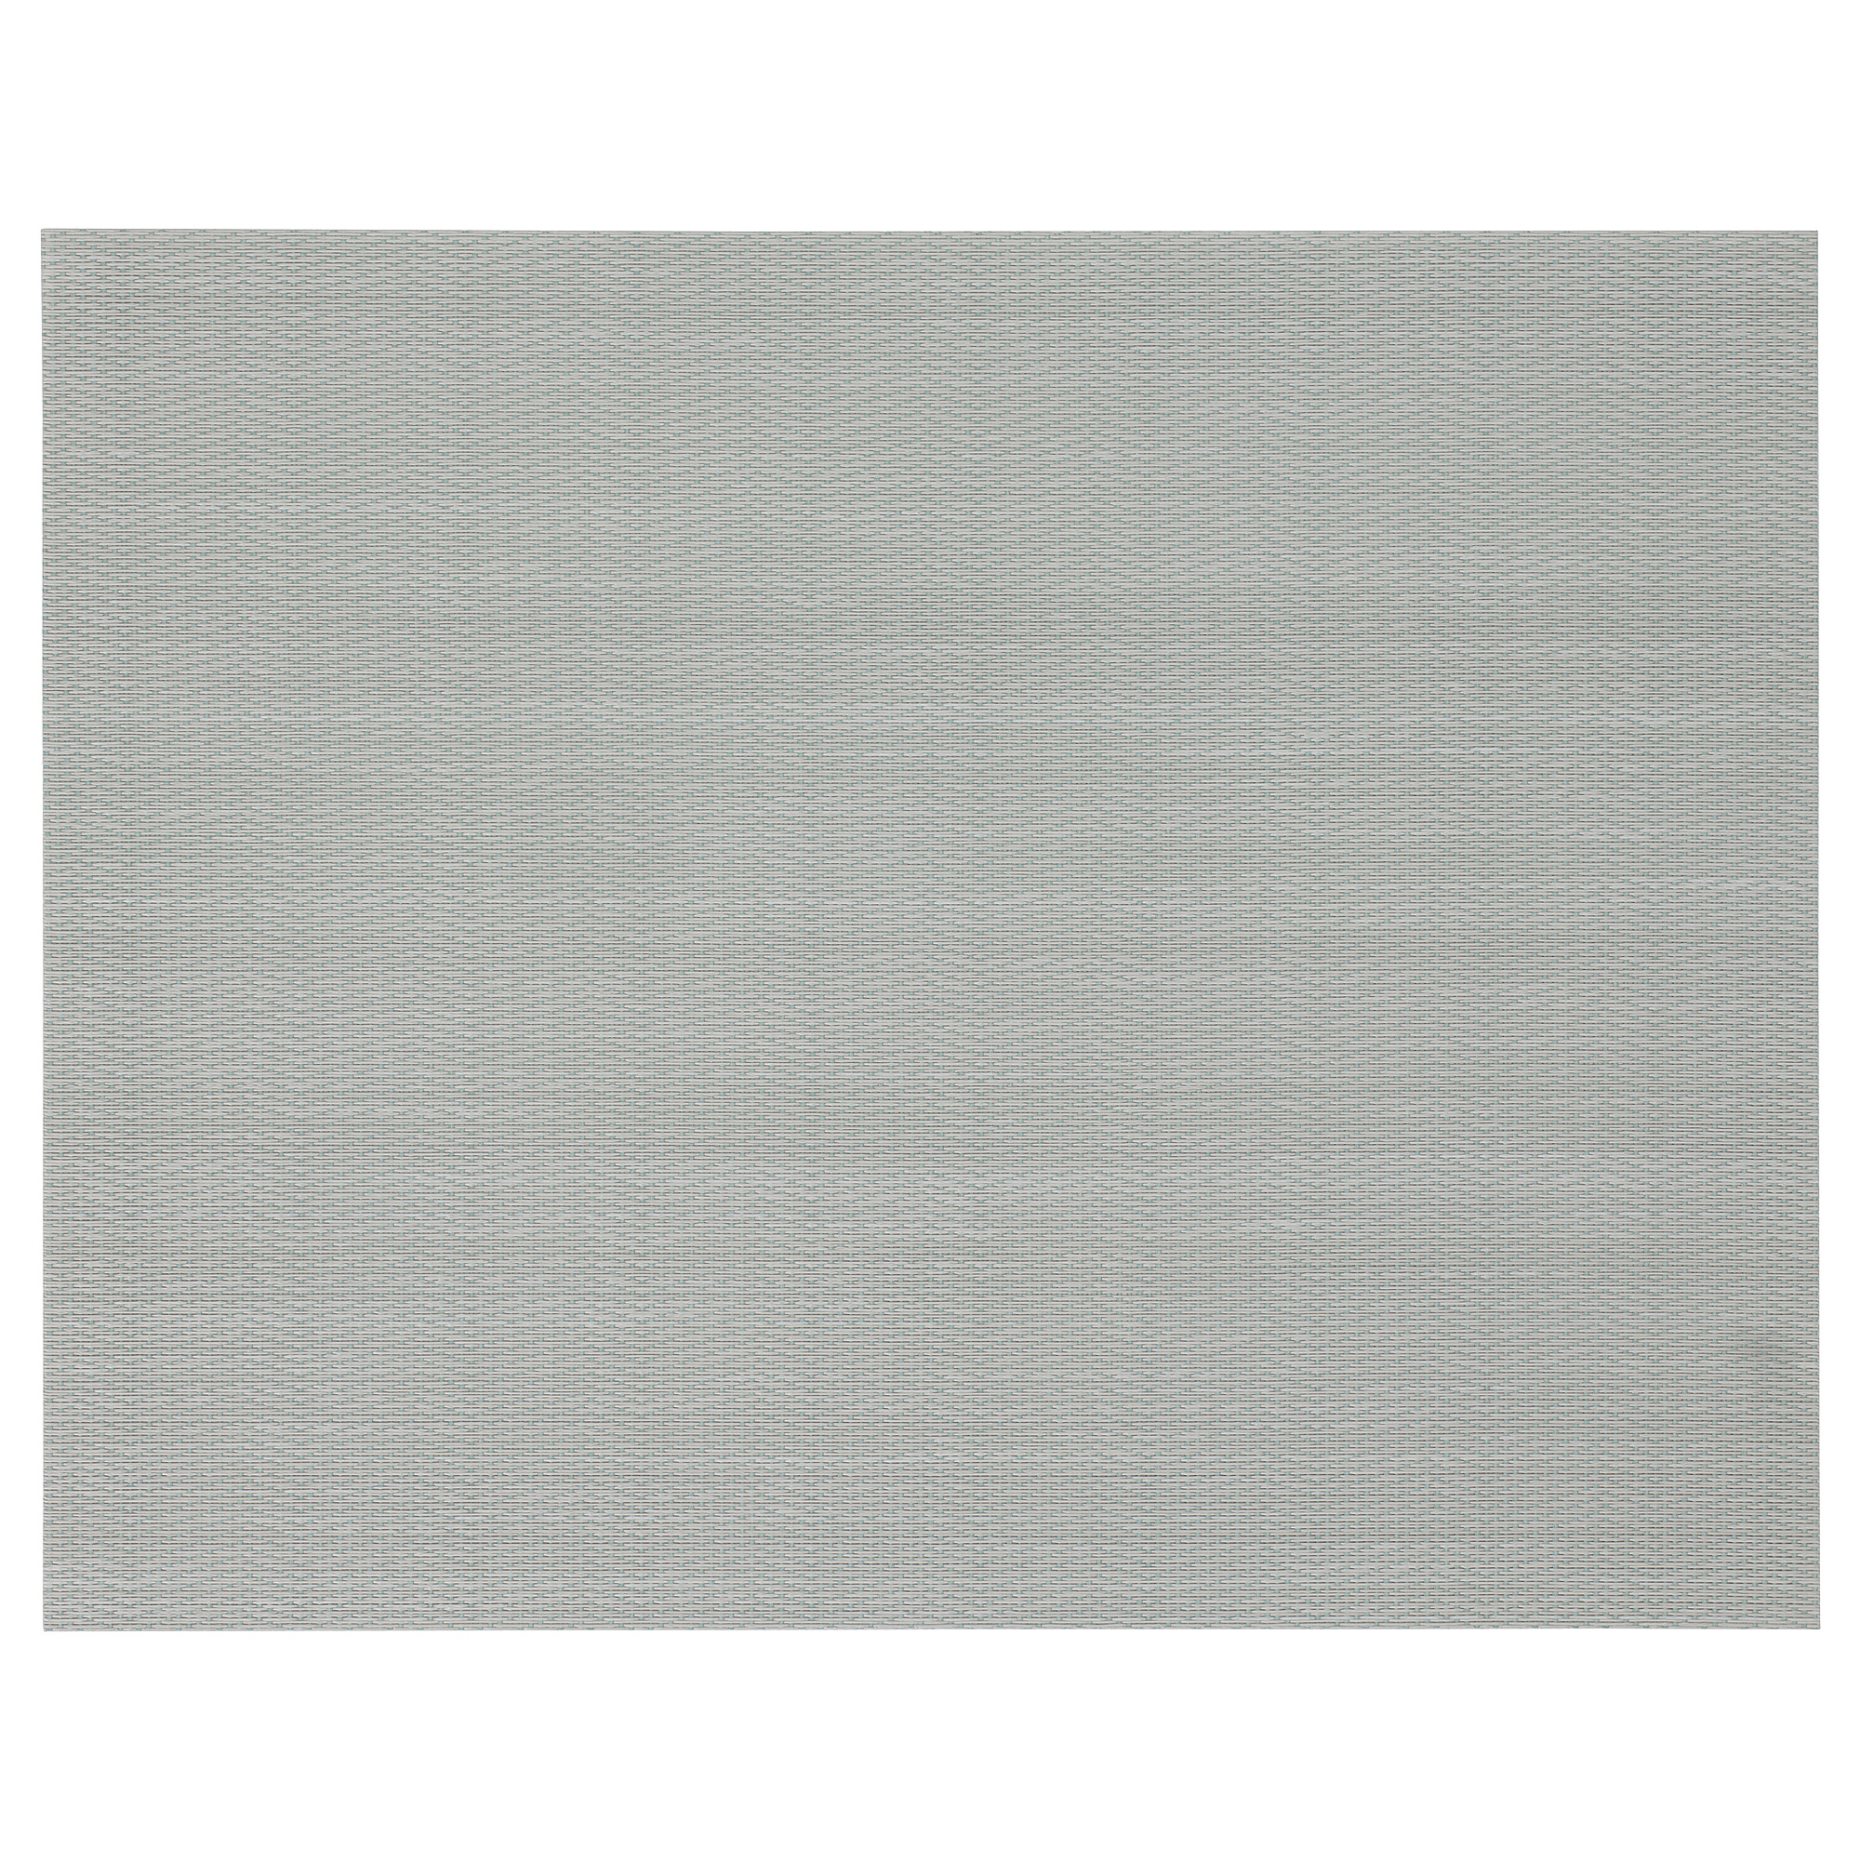 FLYGFISK, place mat, 38x30 cm, 005.692.52